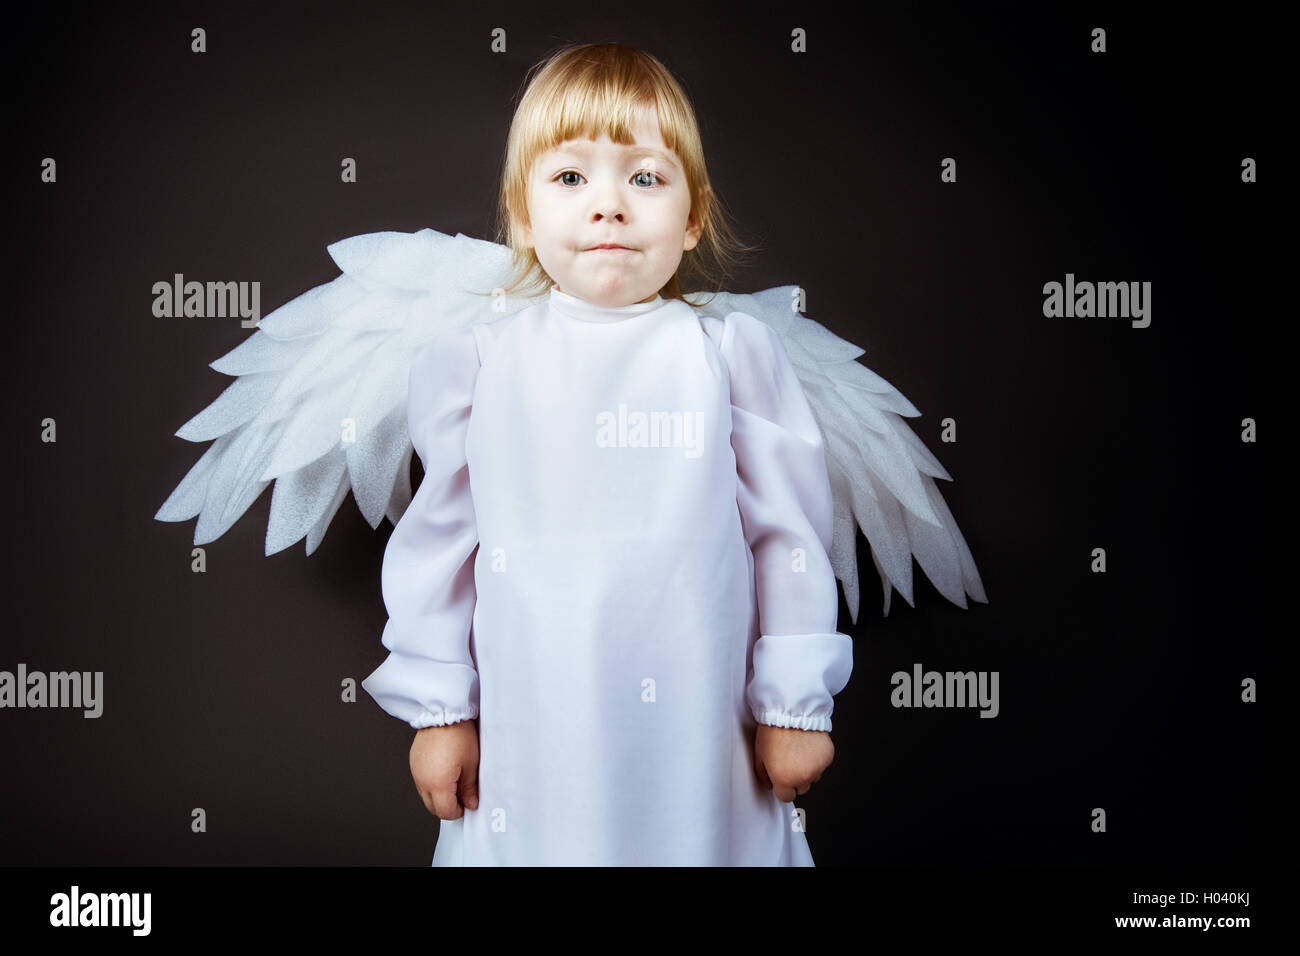 Cute baby in angel costume Stock Photo